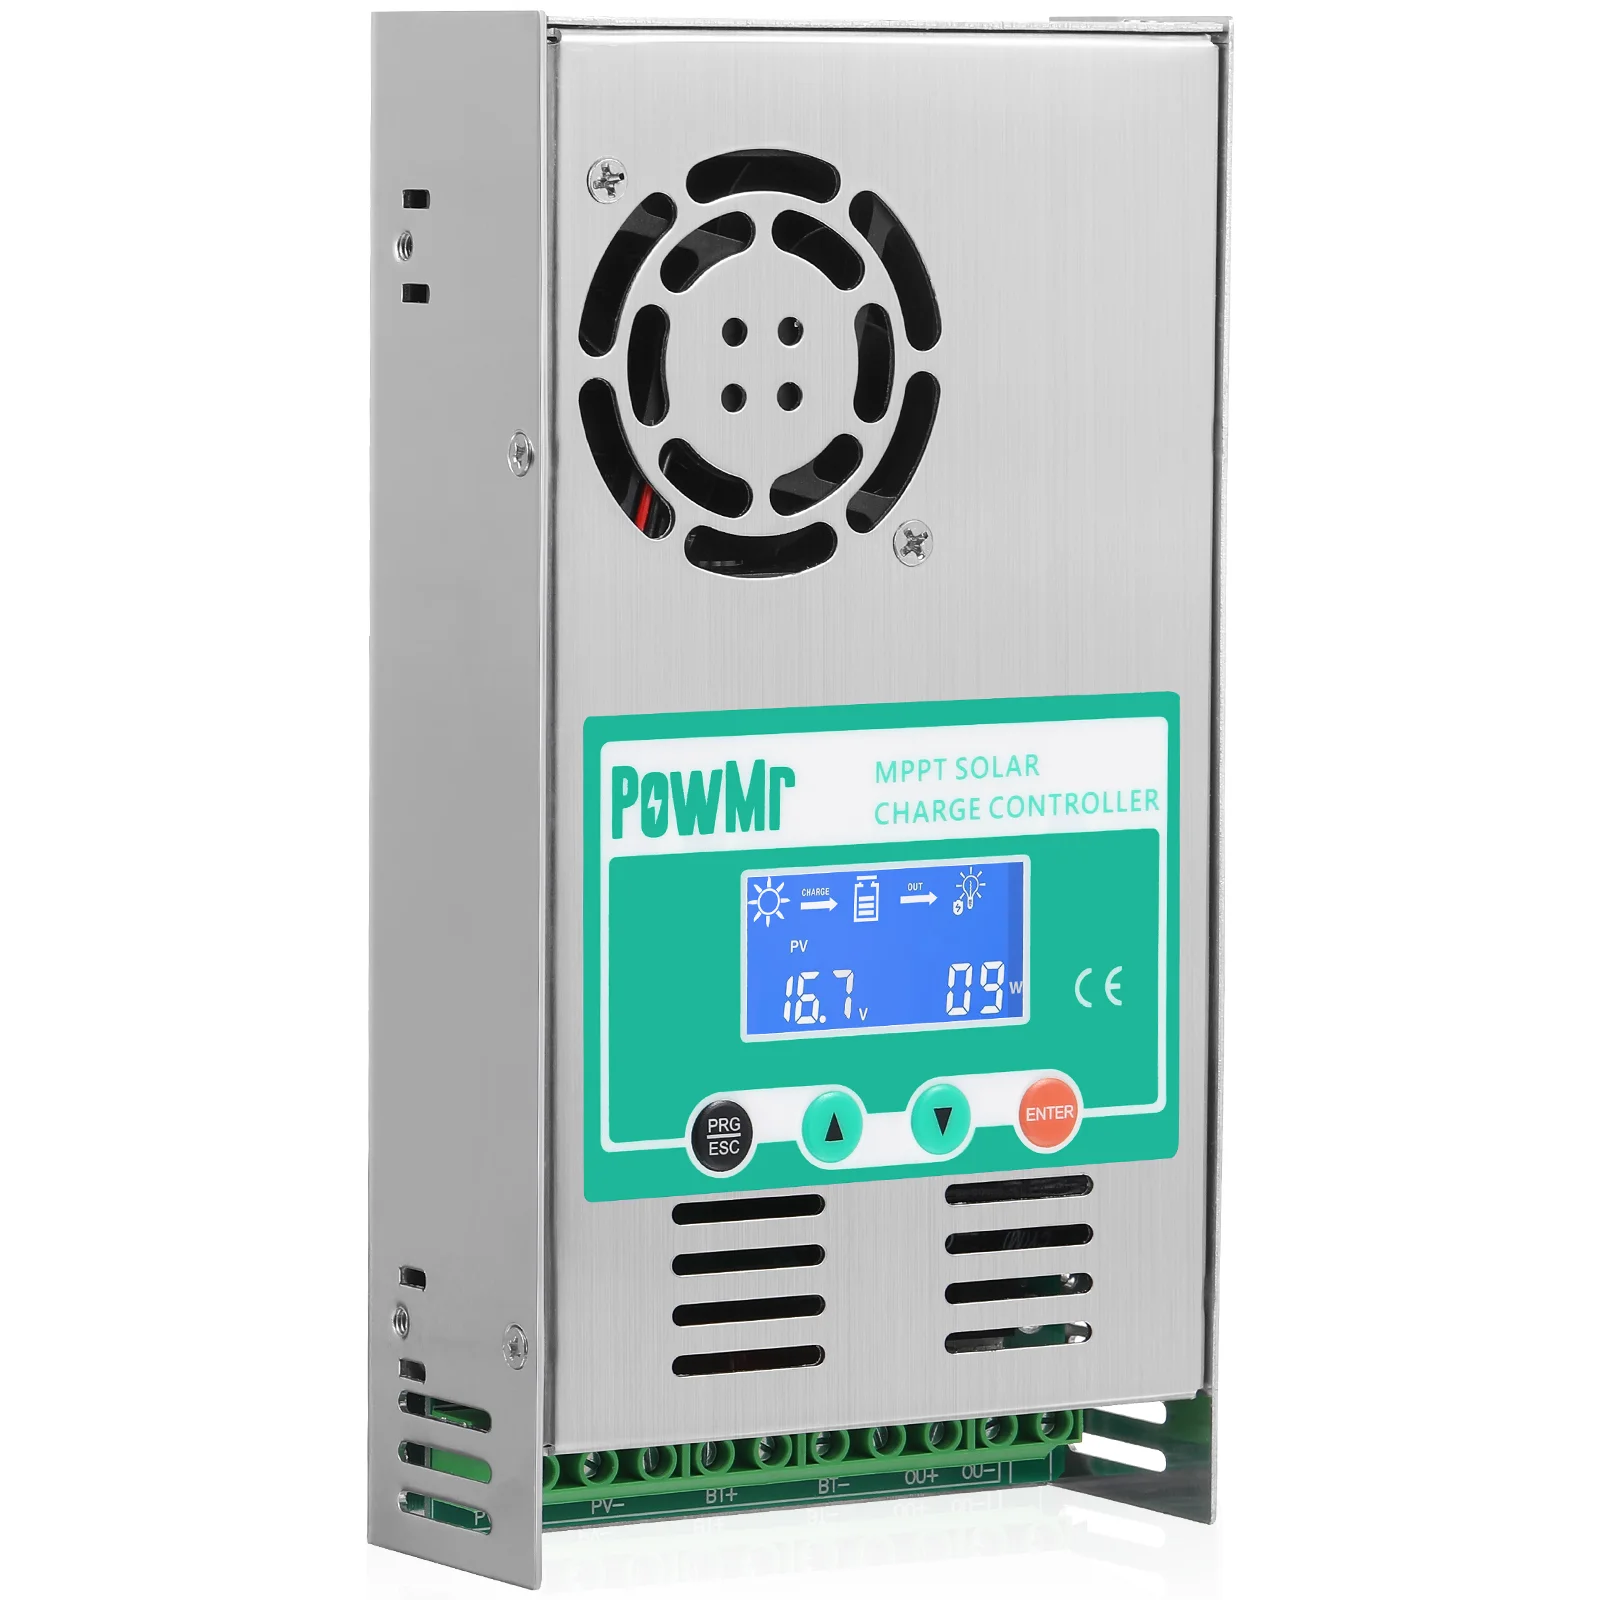 

Mppt Solar Controller 60a 12v-48v Photovoltaic RV Home Energy Storage System (hhj-60a) Power Pv Regulator Panel Charge